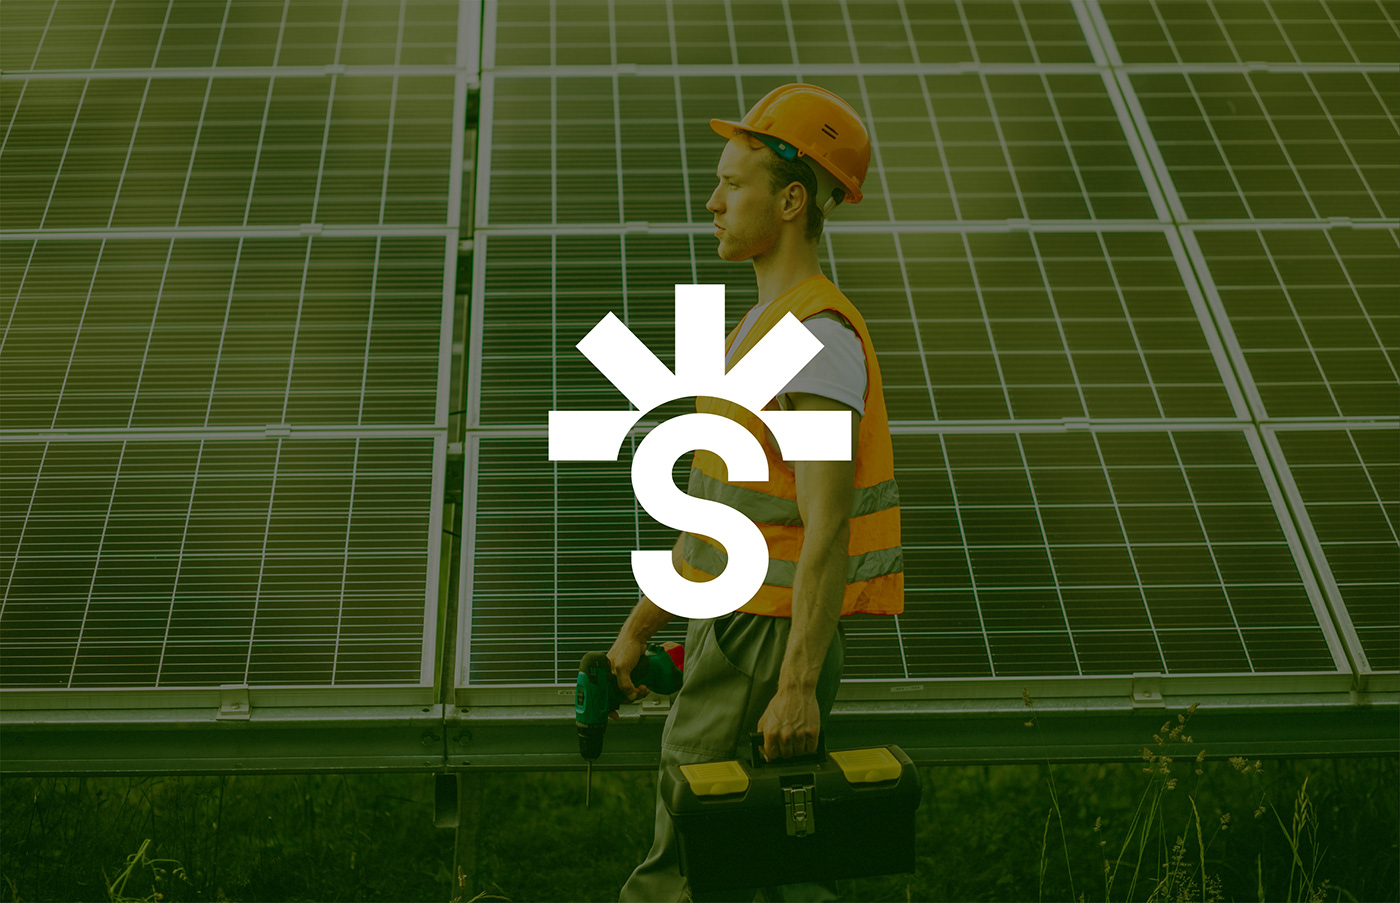 Solar panel power logo Branding, Brand Identity